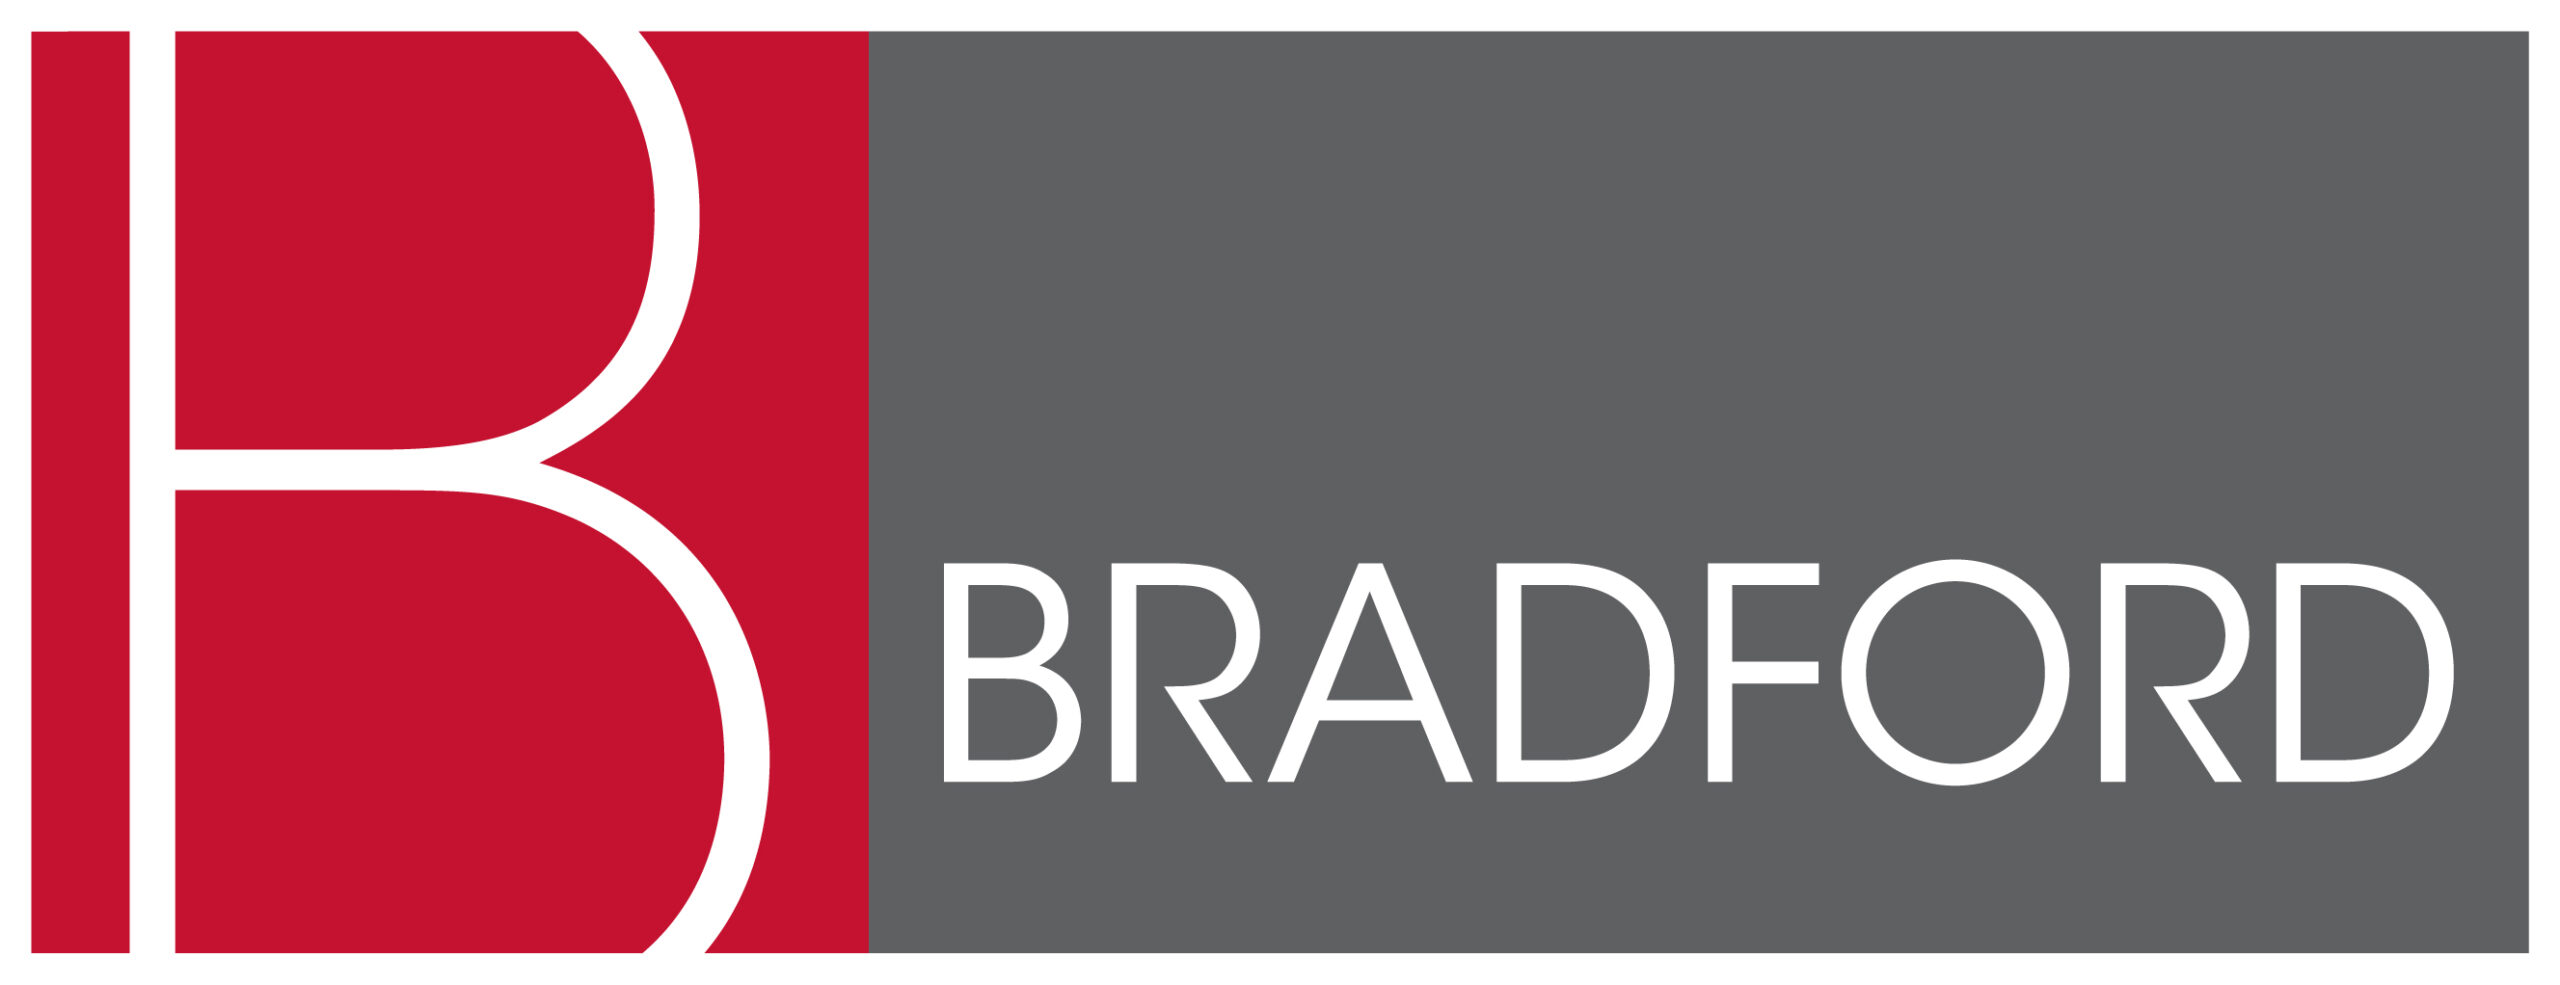 Bradford logo_color_300dpi